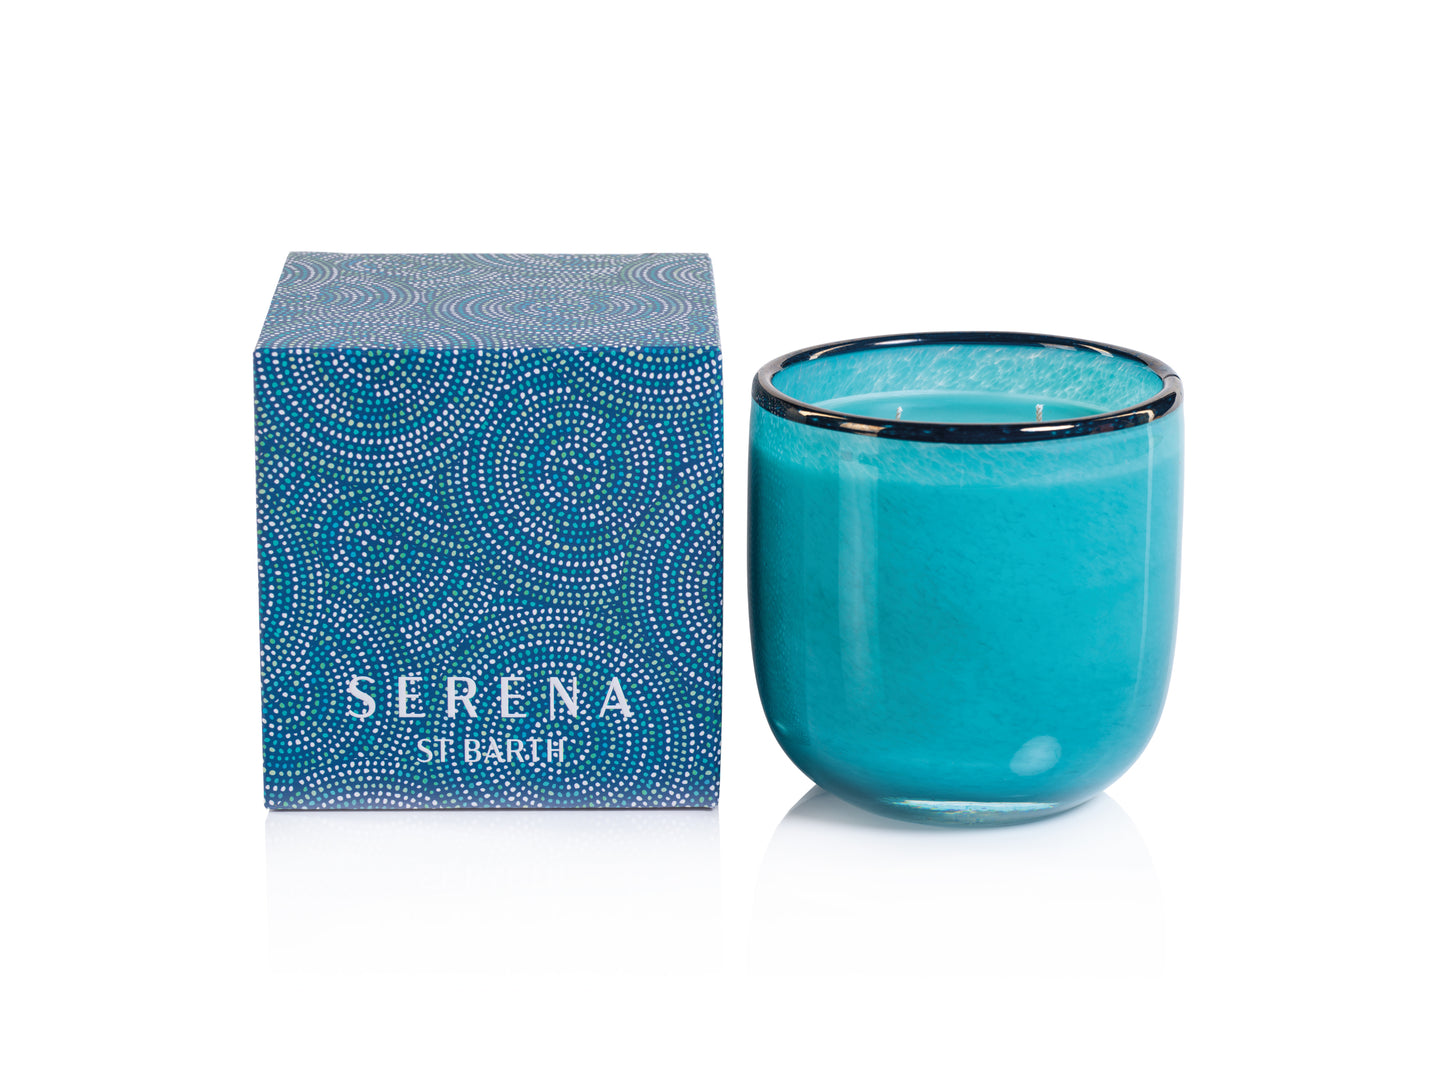 AQUA PALM Zodax Serena Saint Barth Scented Jar Candle 14.5 oz - Gift Boxed